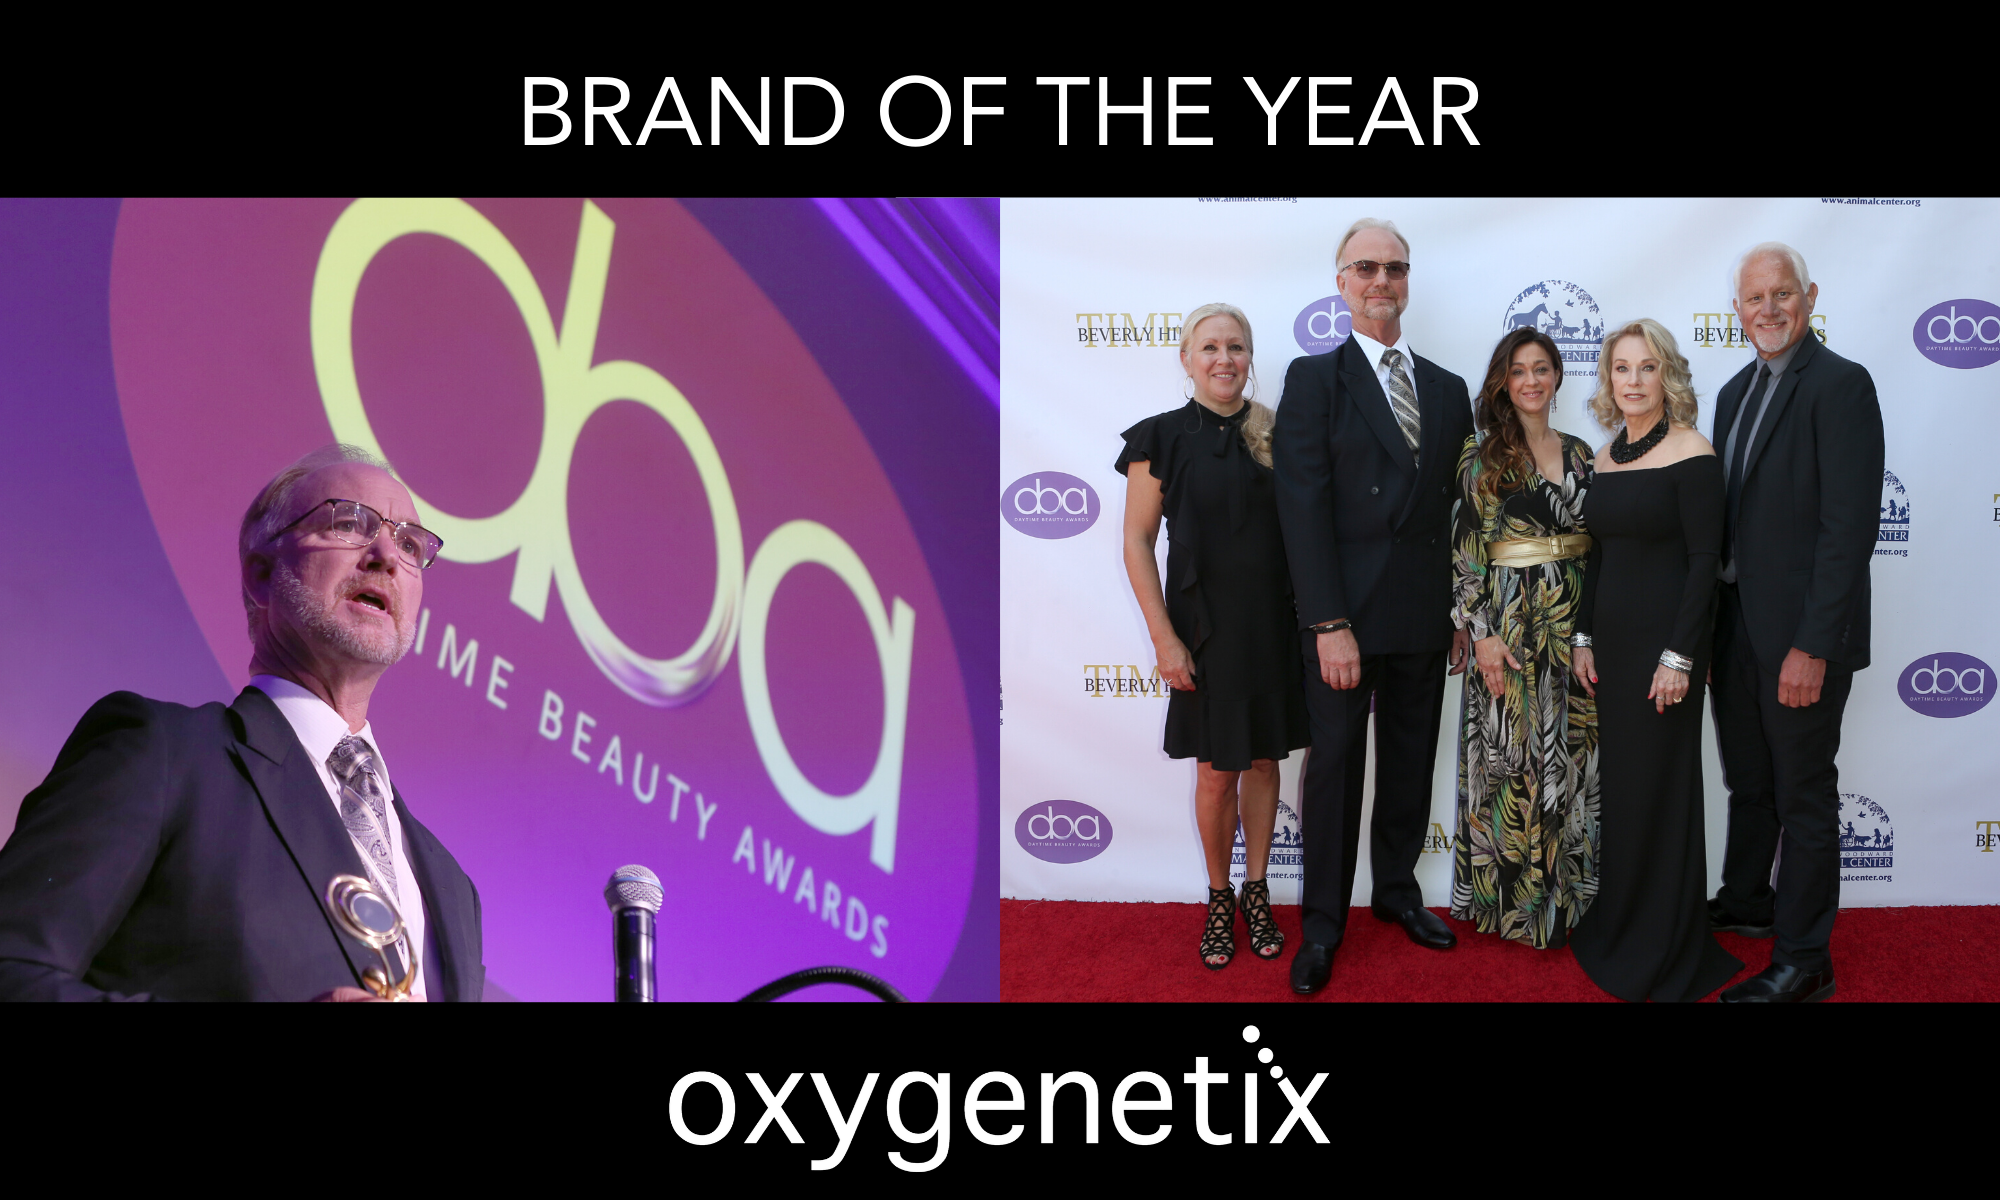 Oxygenetix Won Brand of The Year at the Daytime Beauty Awards